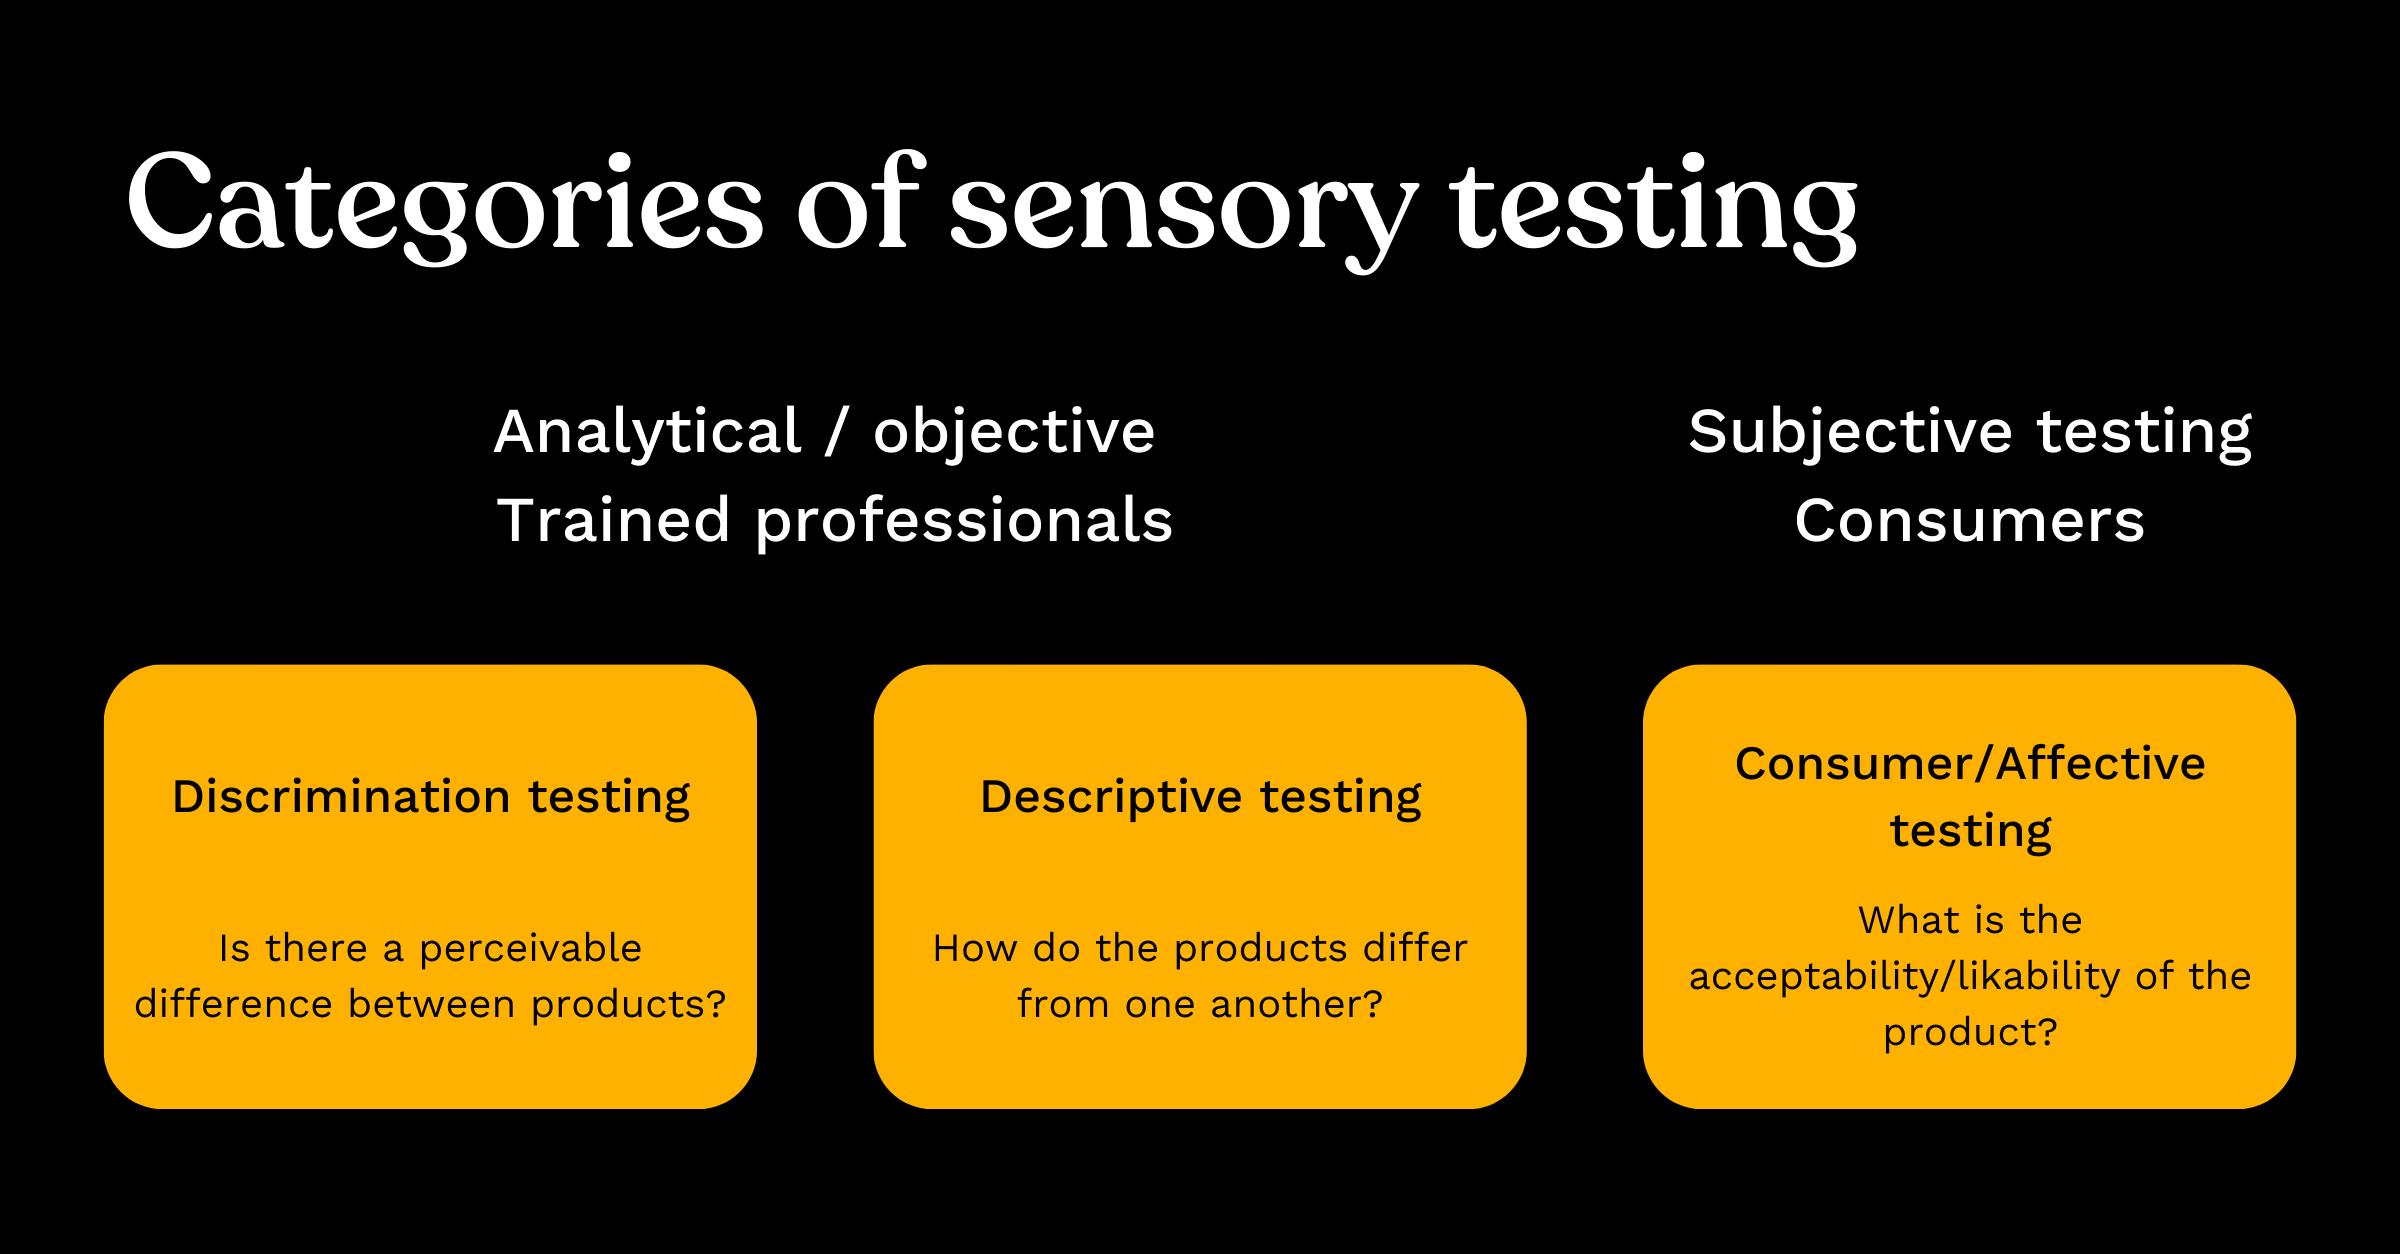 Categories of sensory testing